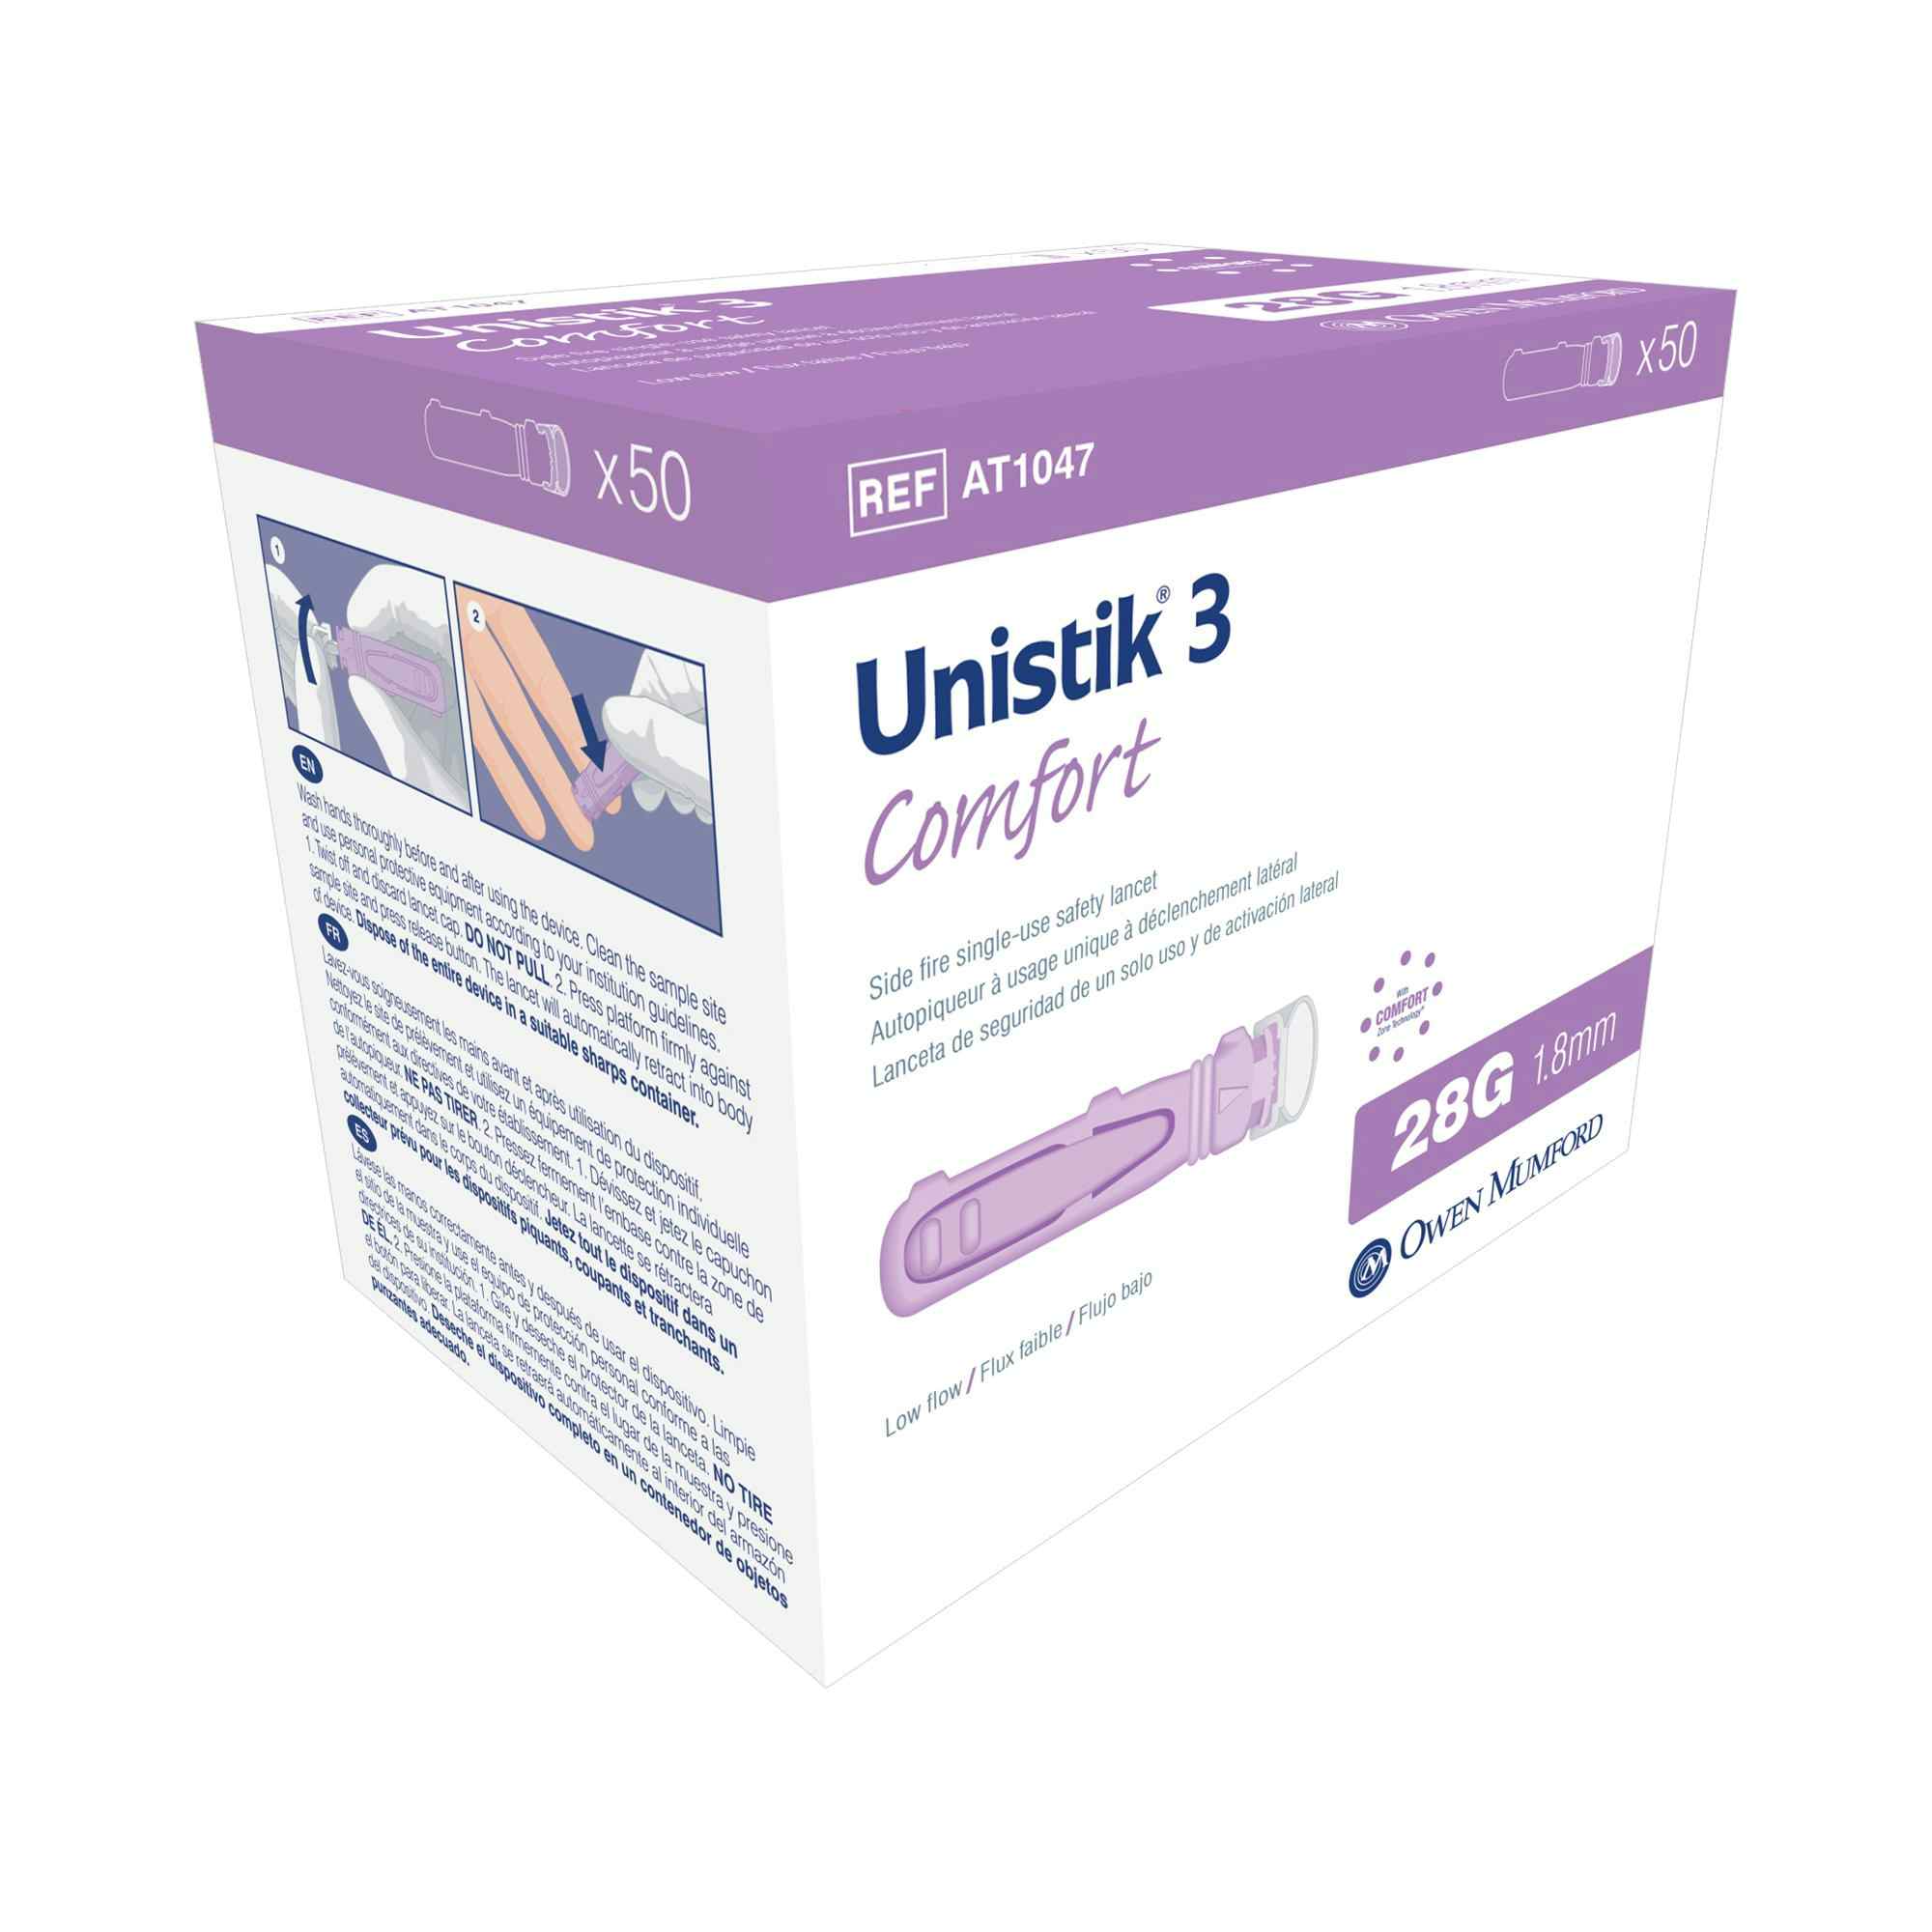 Unistik 3 Comfort Side Fire Single-Use Safety Lancet, 28g , AT-1047, Box of 50